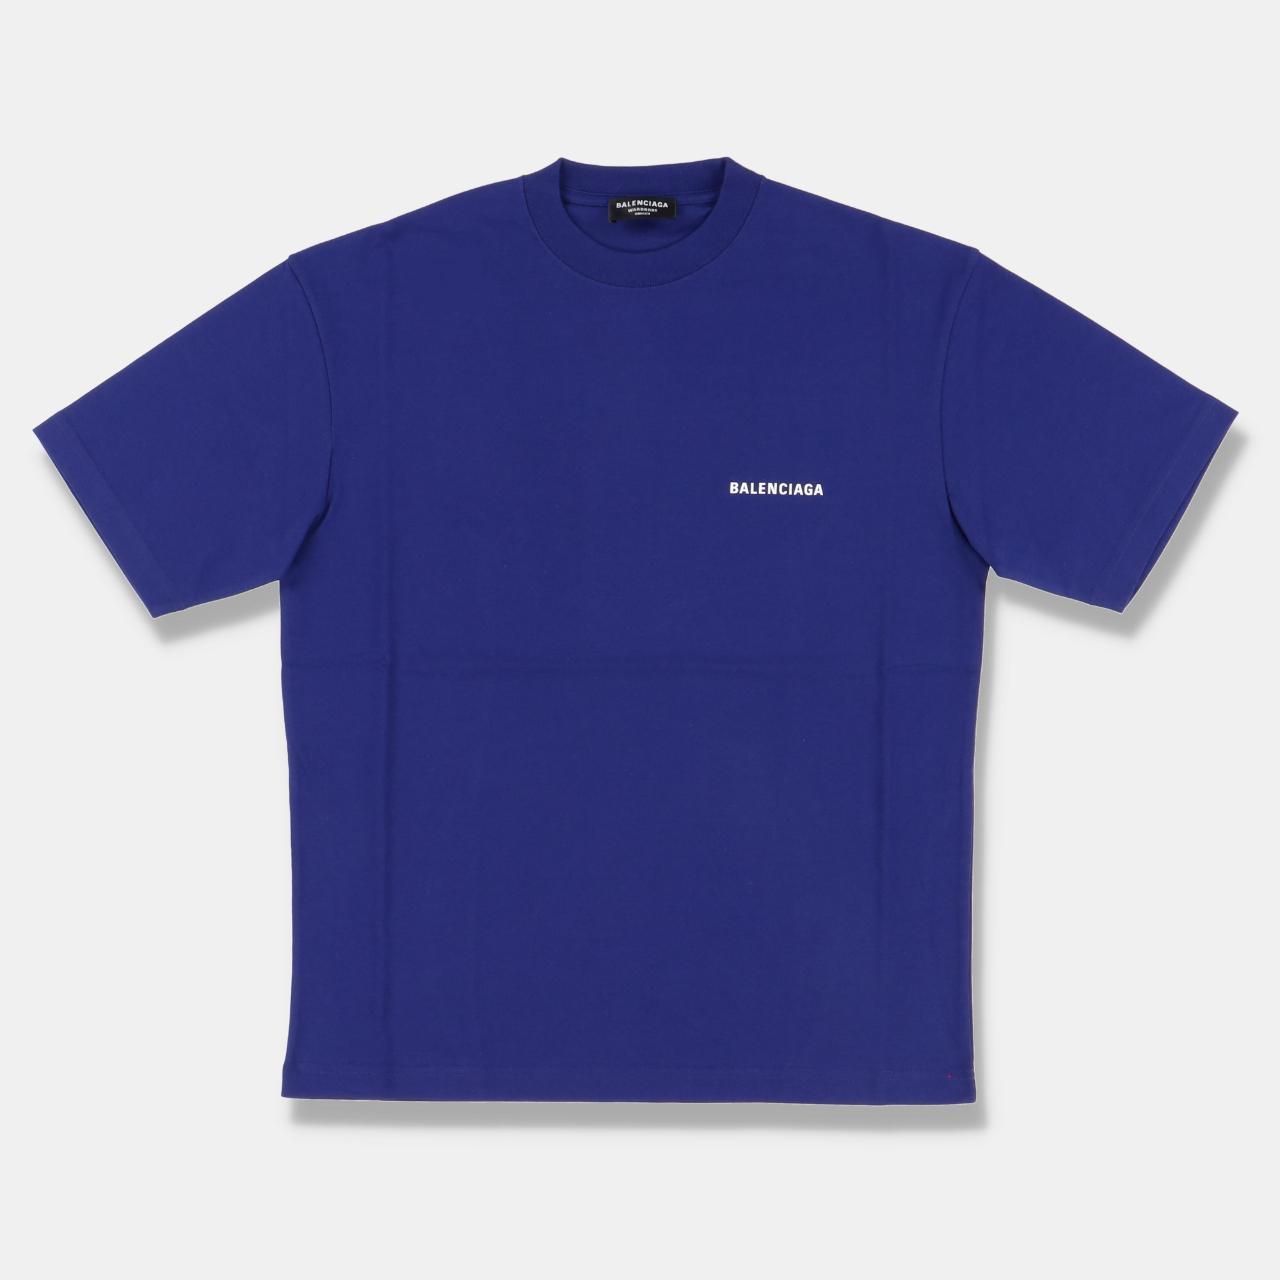 Product Image 2 - Balenciaga Blue Logo Print T-Shirt

-Size